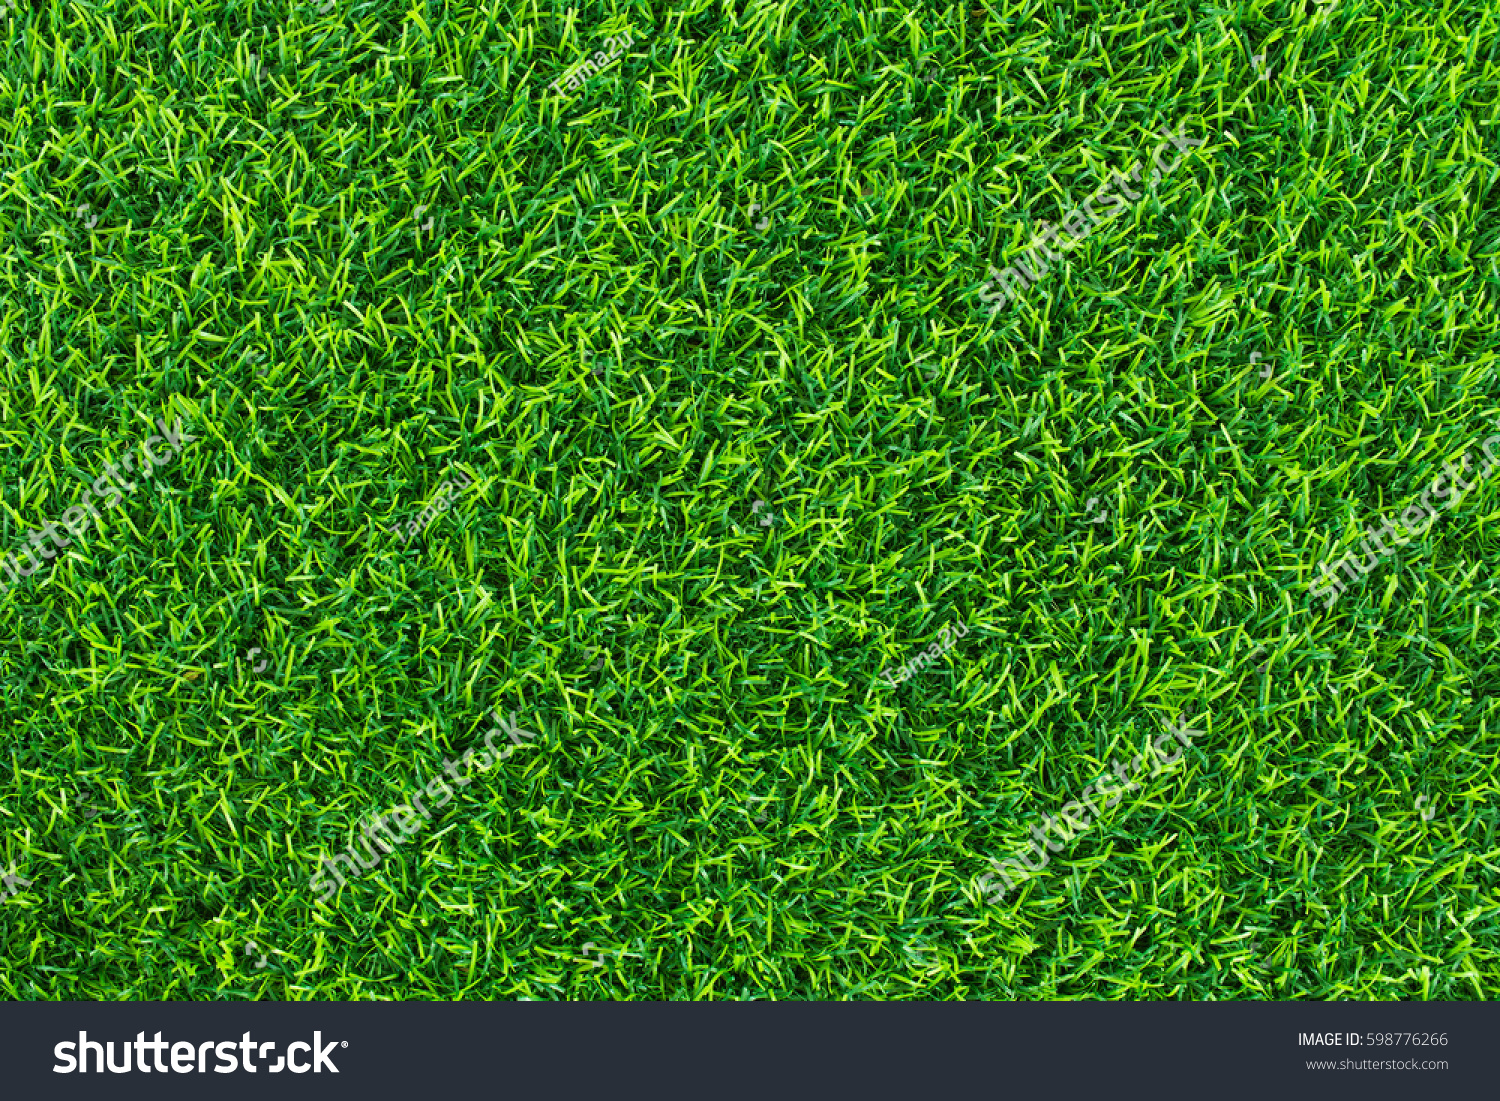 Green grass background texture .top view.
 #598776266